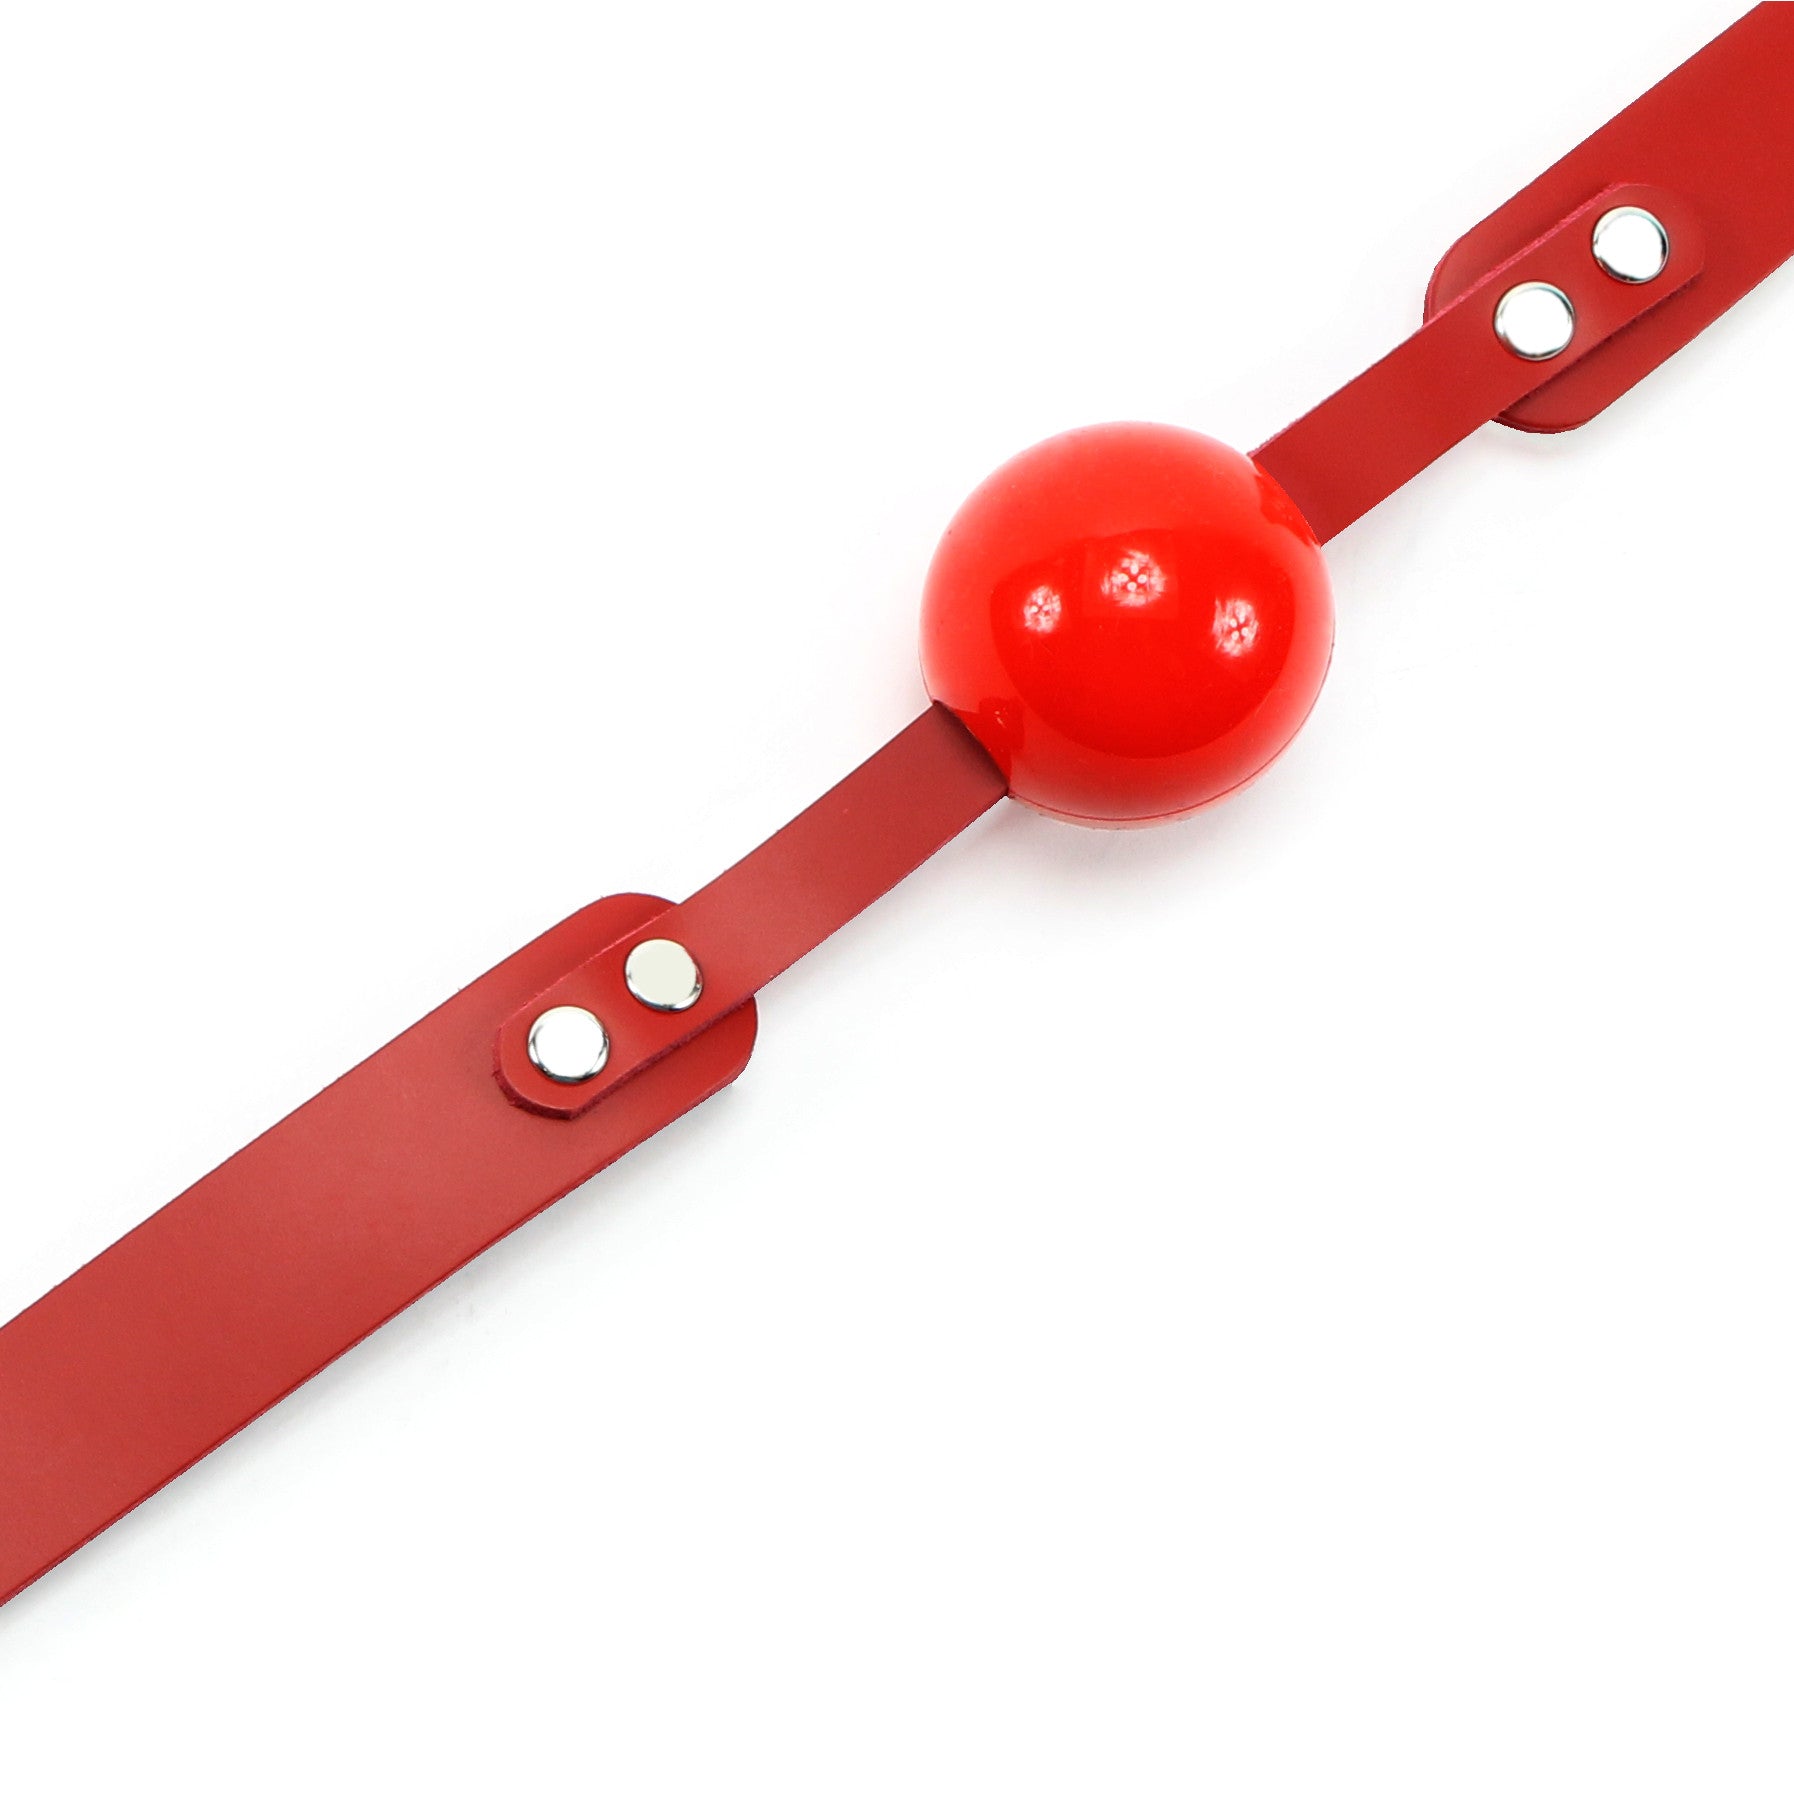 High-end medical grade silicone ball gag red